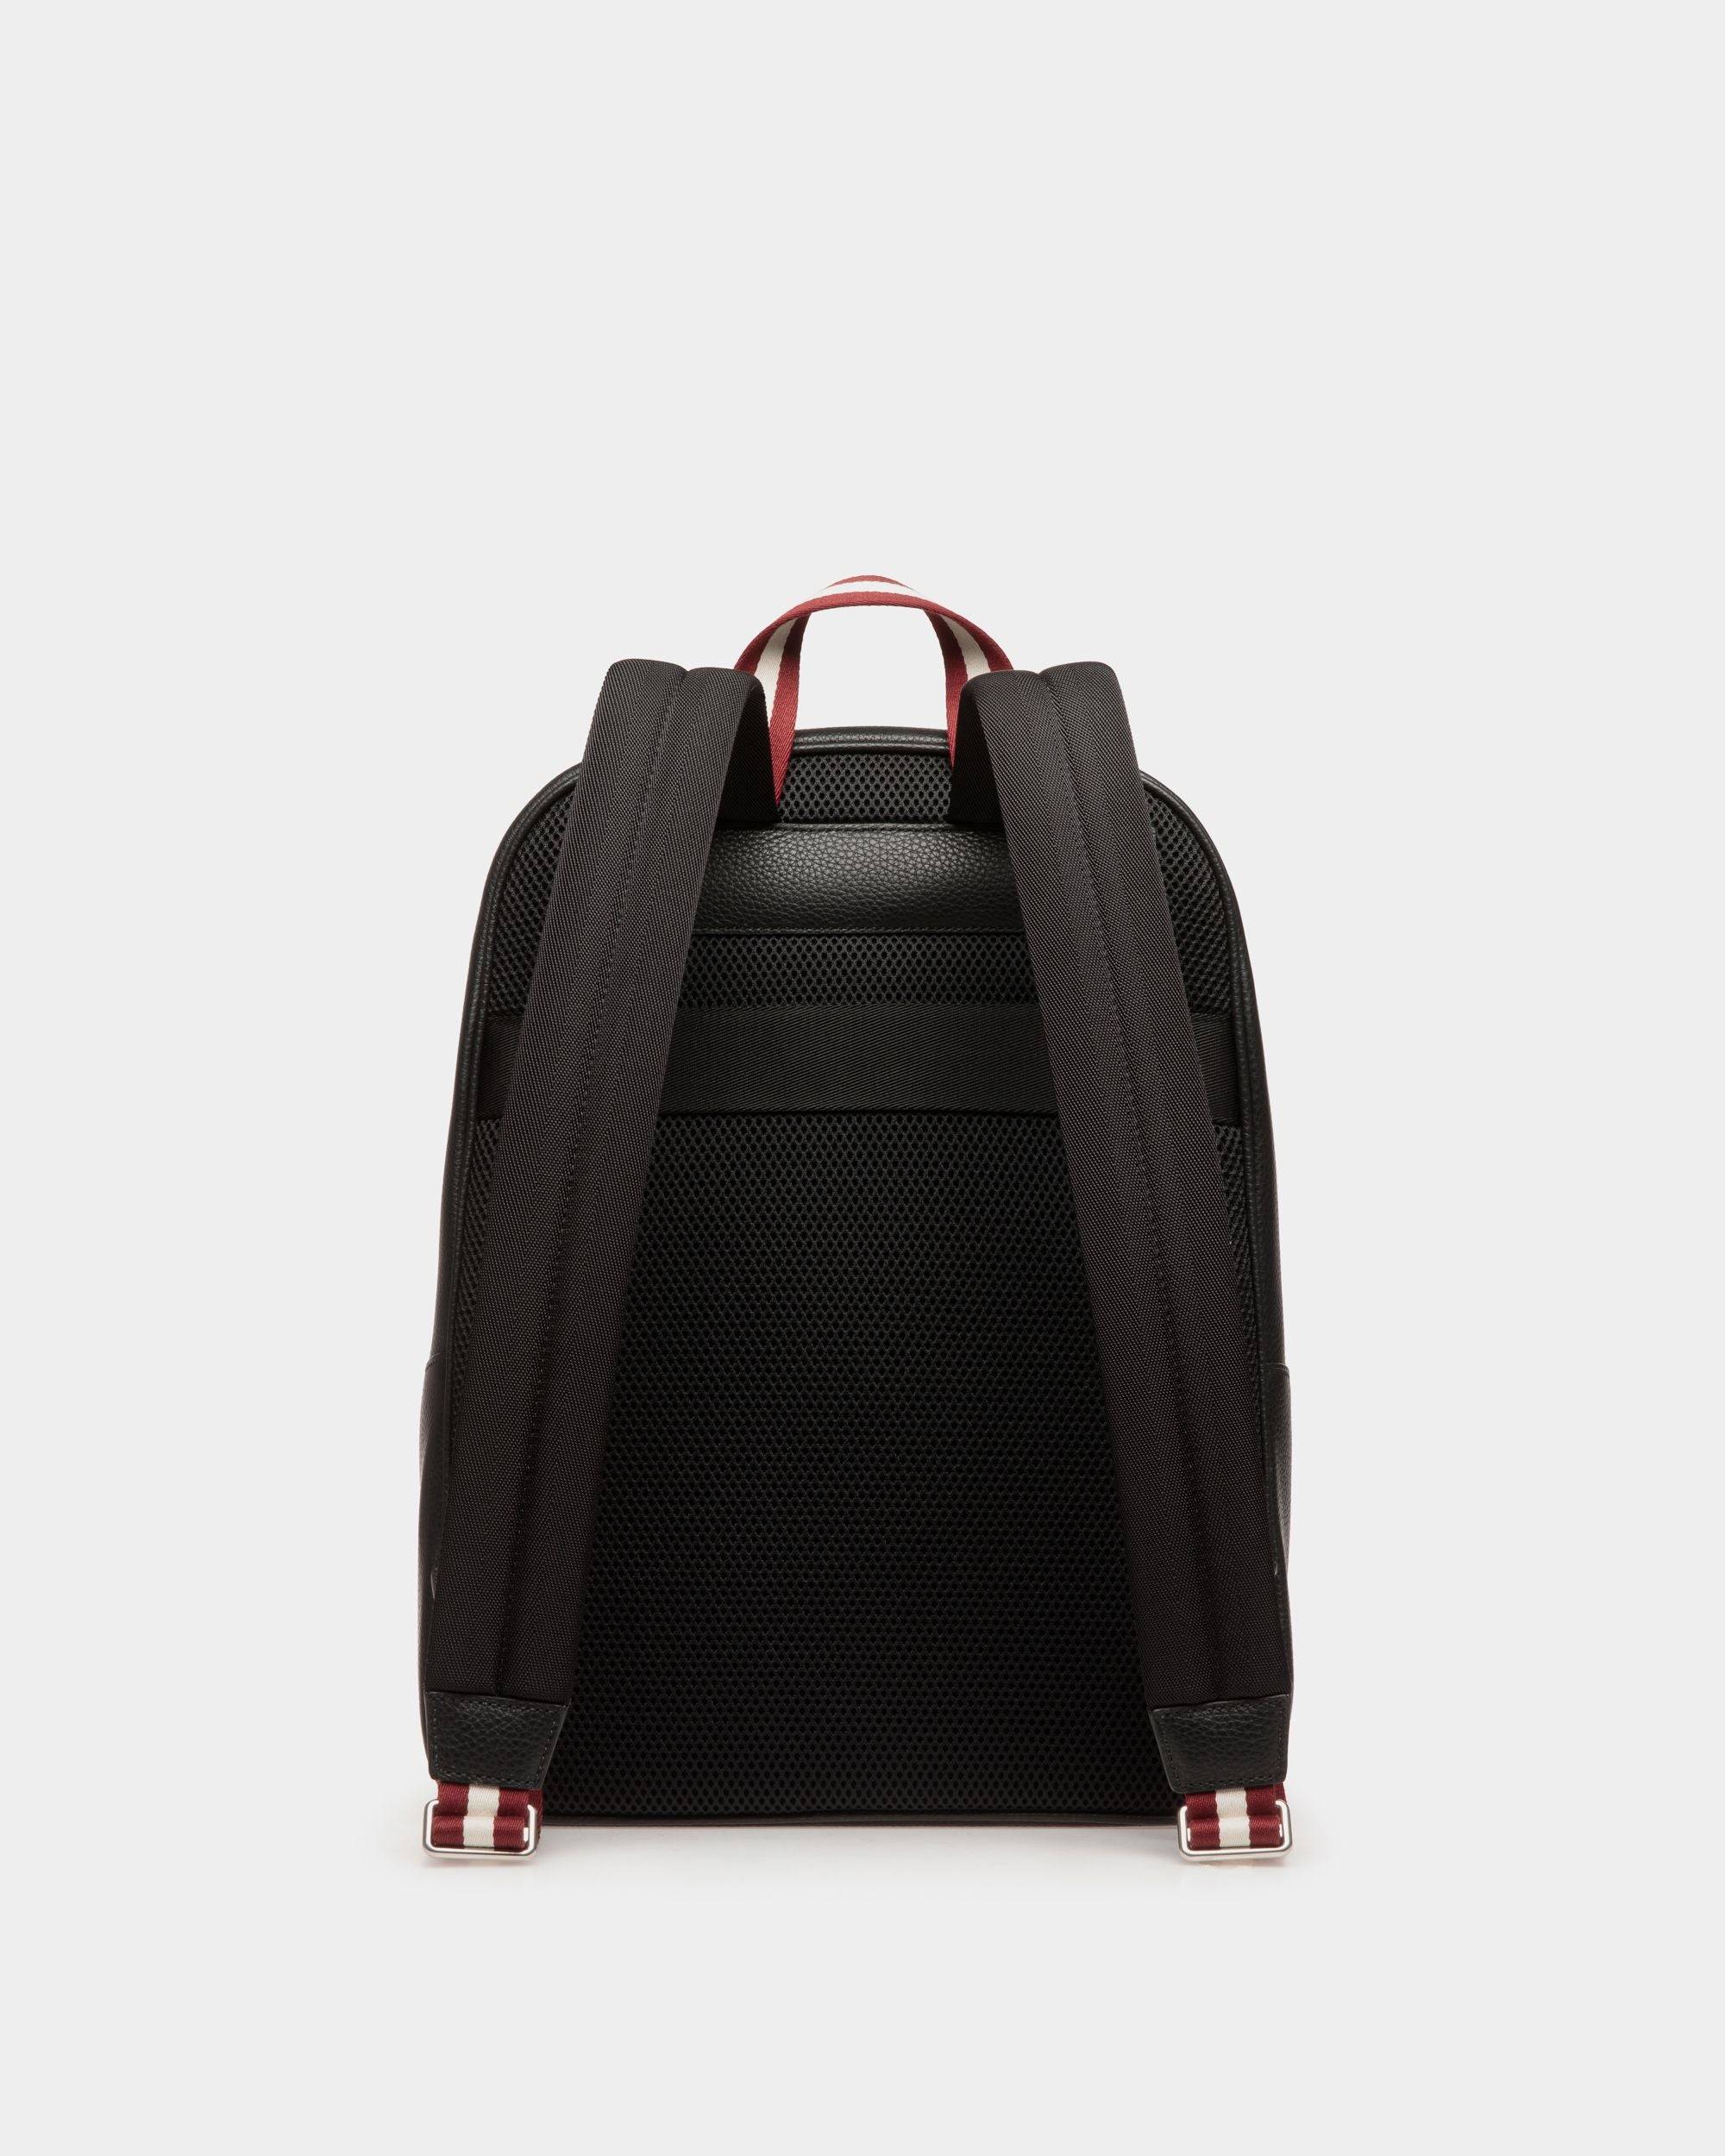 Code | Men's Backpack in Black Grained Leather | Bally | Still Life Back